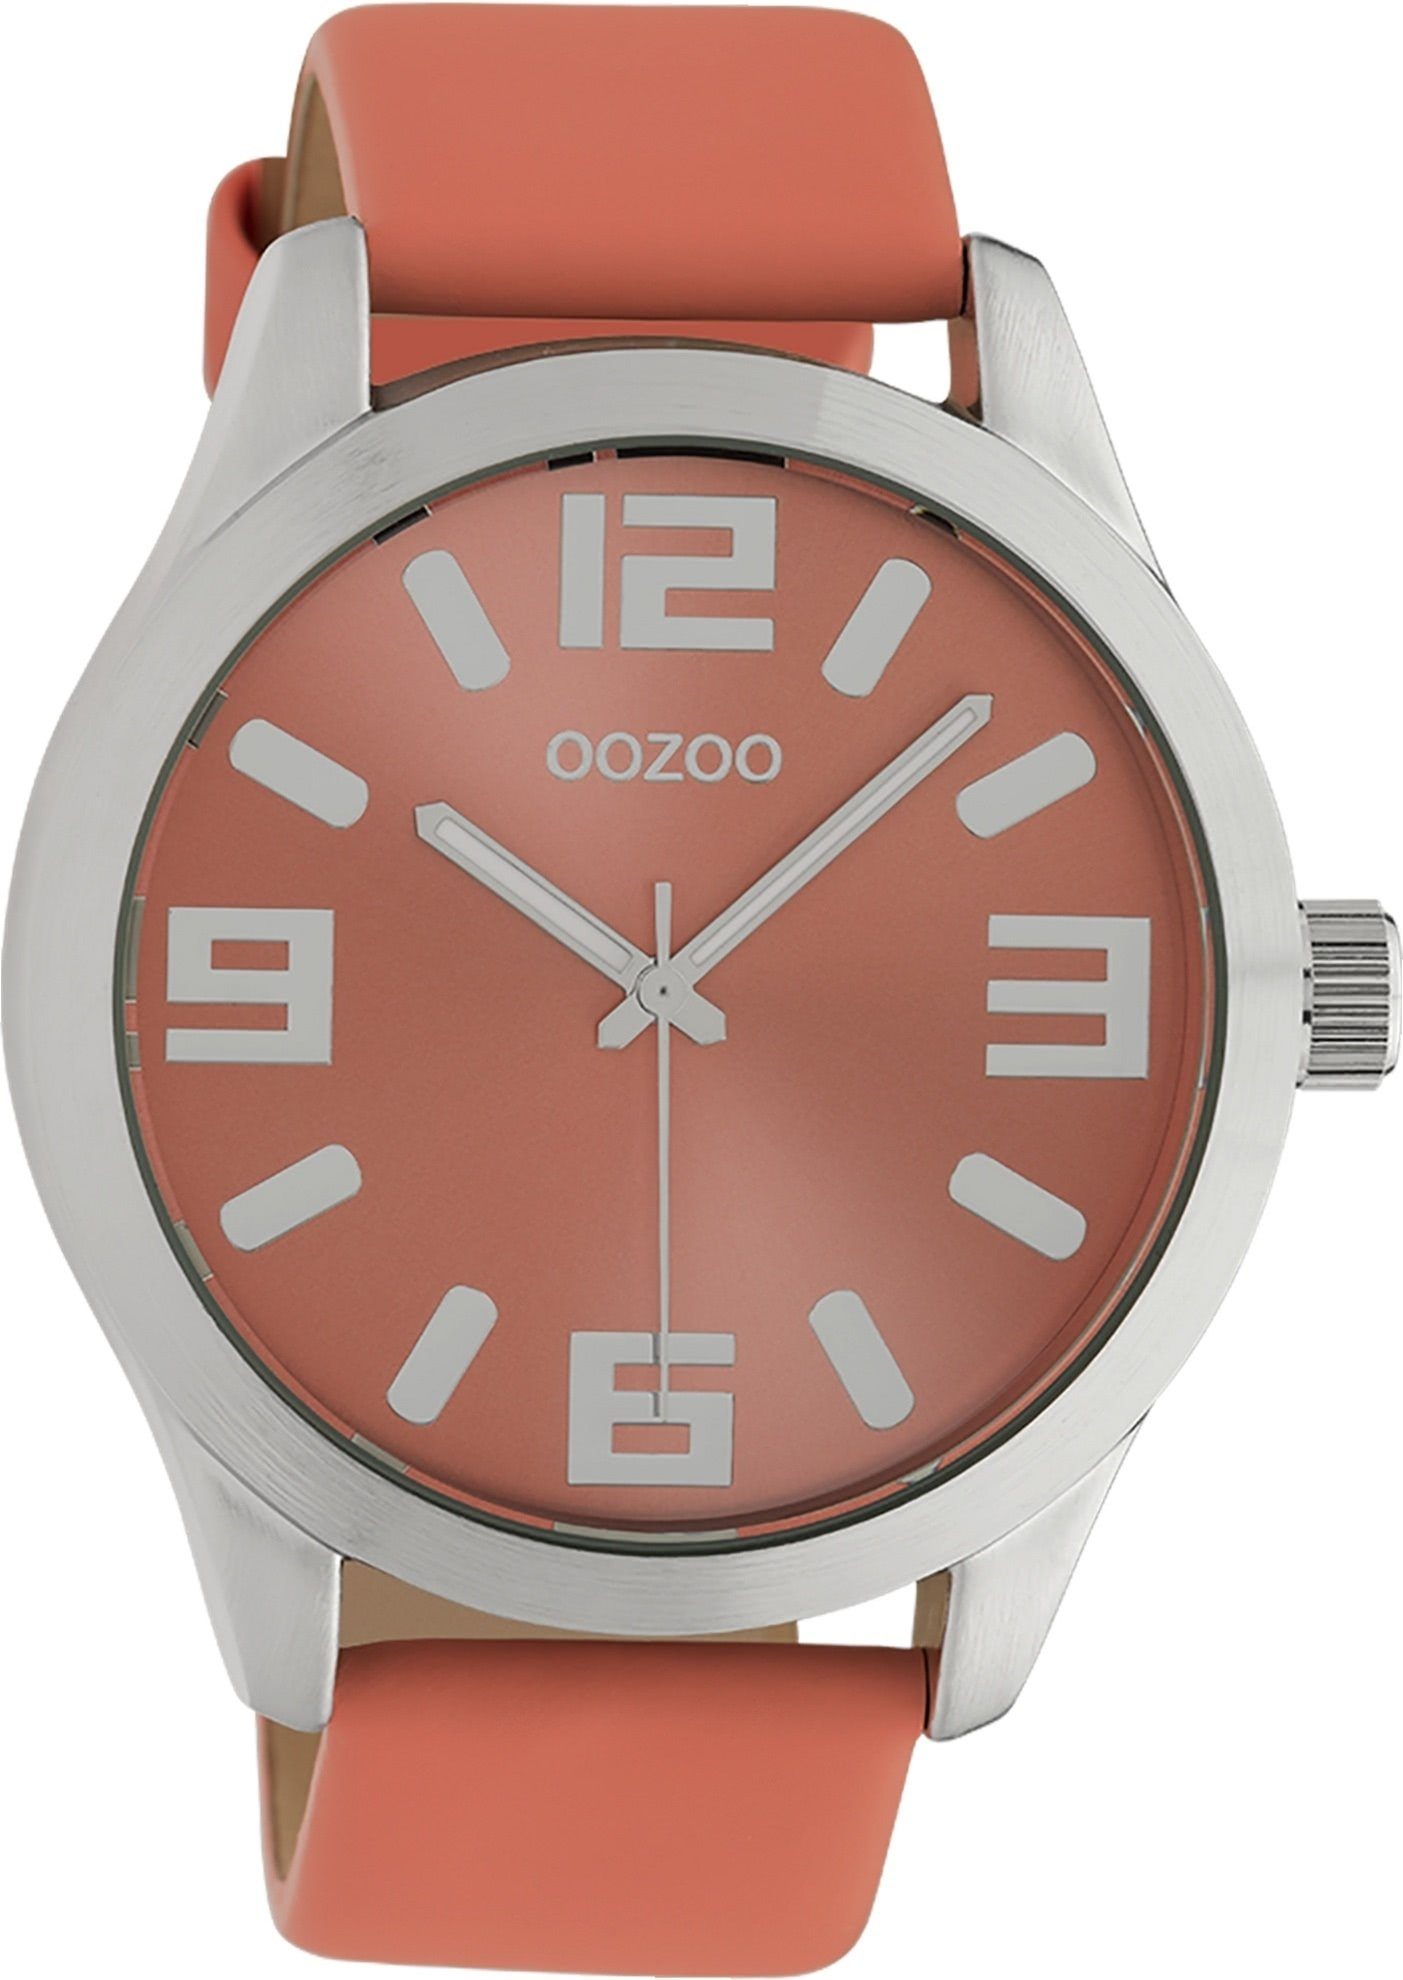 Damen extra (ca. Analog, Fashion-Style Oozoo Orange OOZOO Armbanduhr Damenuhr Quarzuhr rund, groß Lederarmband, 47mm)